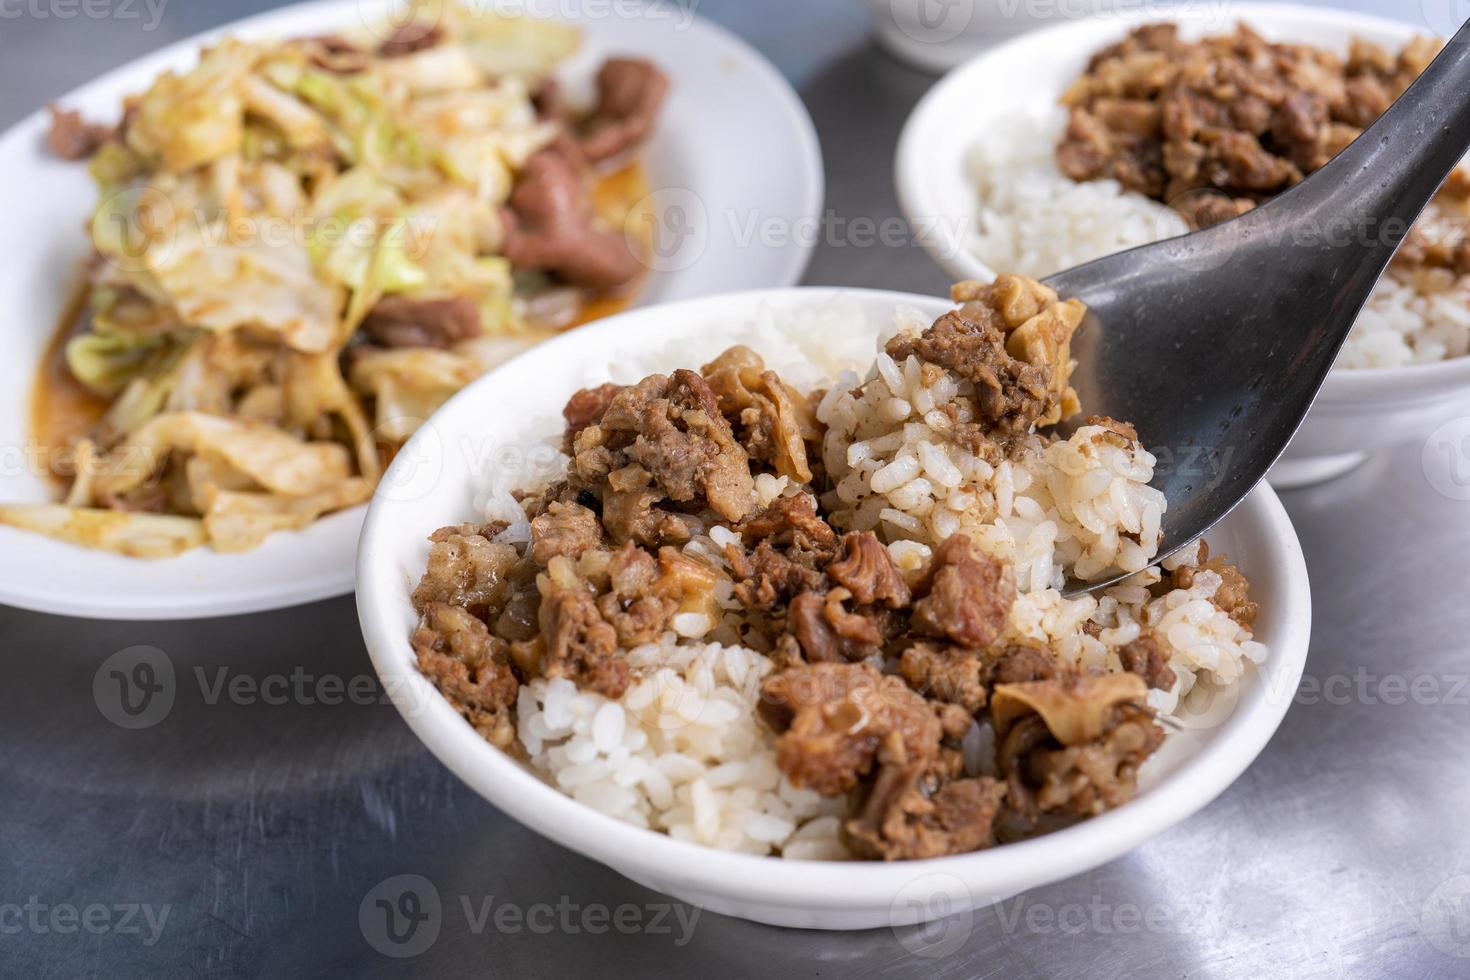 gestoofd vlees rijst, gestoofd rundvlees over- gekookt rijst- in tainan, Taiwan. Taiwanees beroemd traditioneel straat voedsel delicatesse. reizen ontwerp concept, detailopname. foto